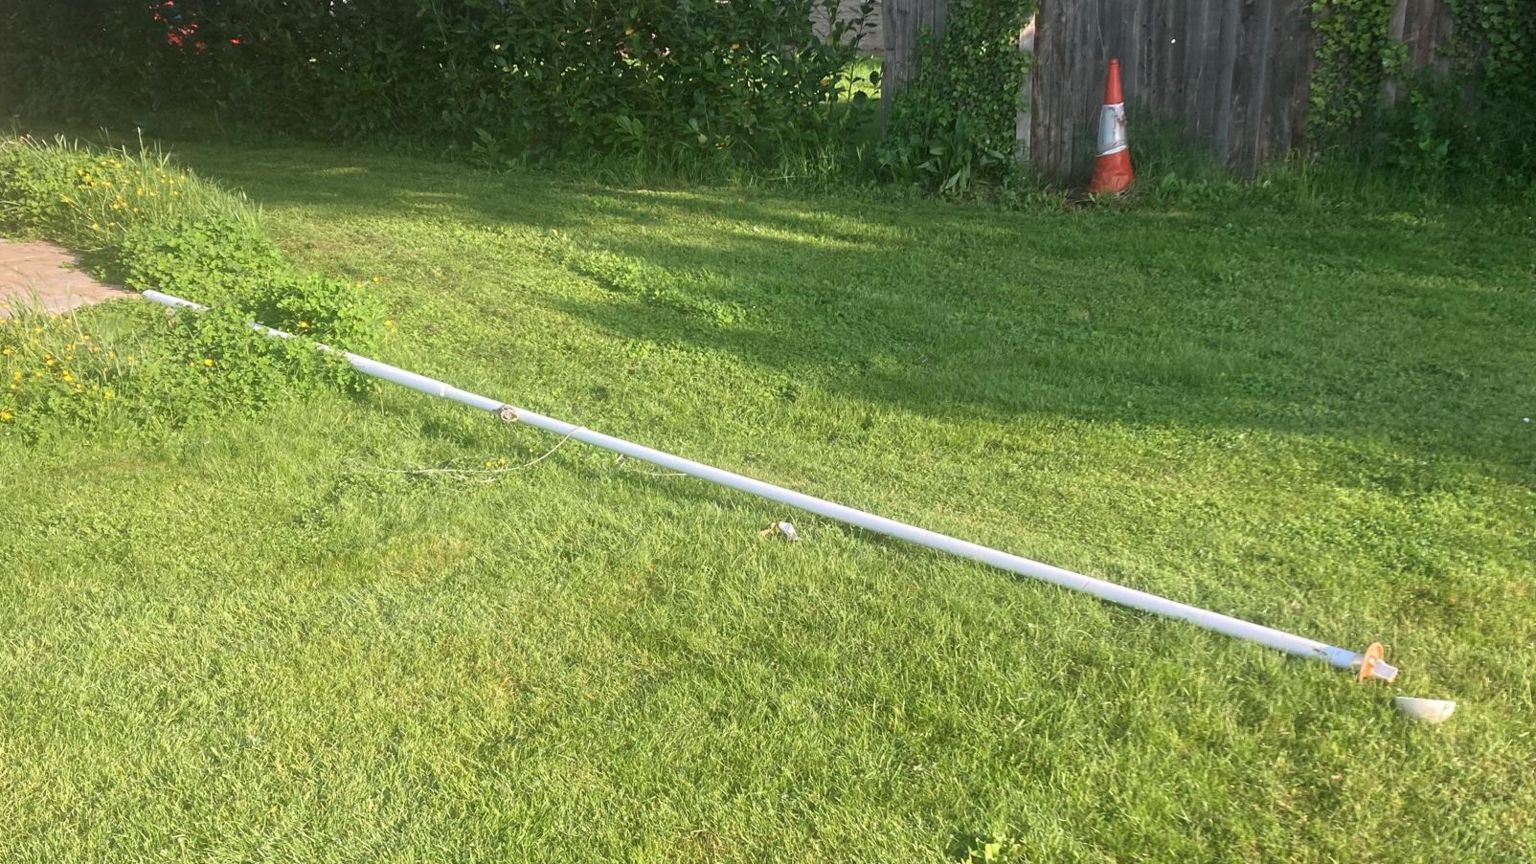 A flag pole that has been cut in Biddenham, Bedfordshire